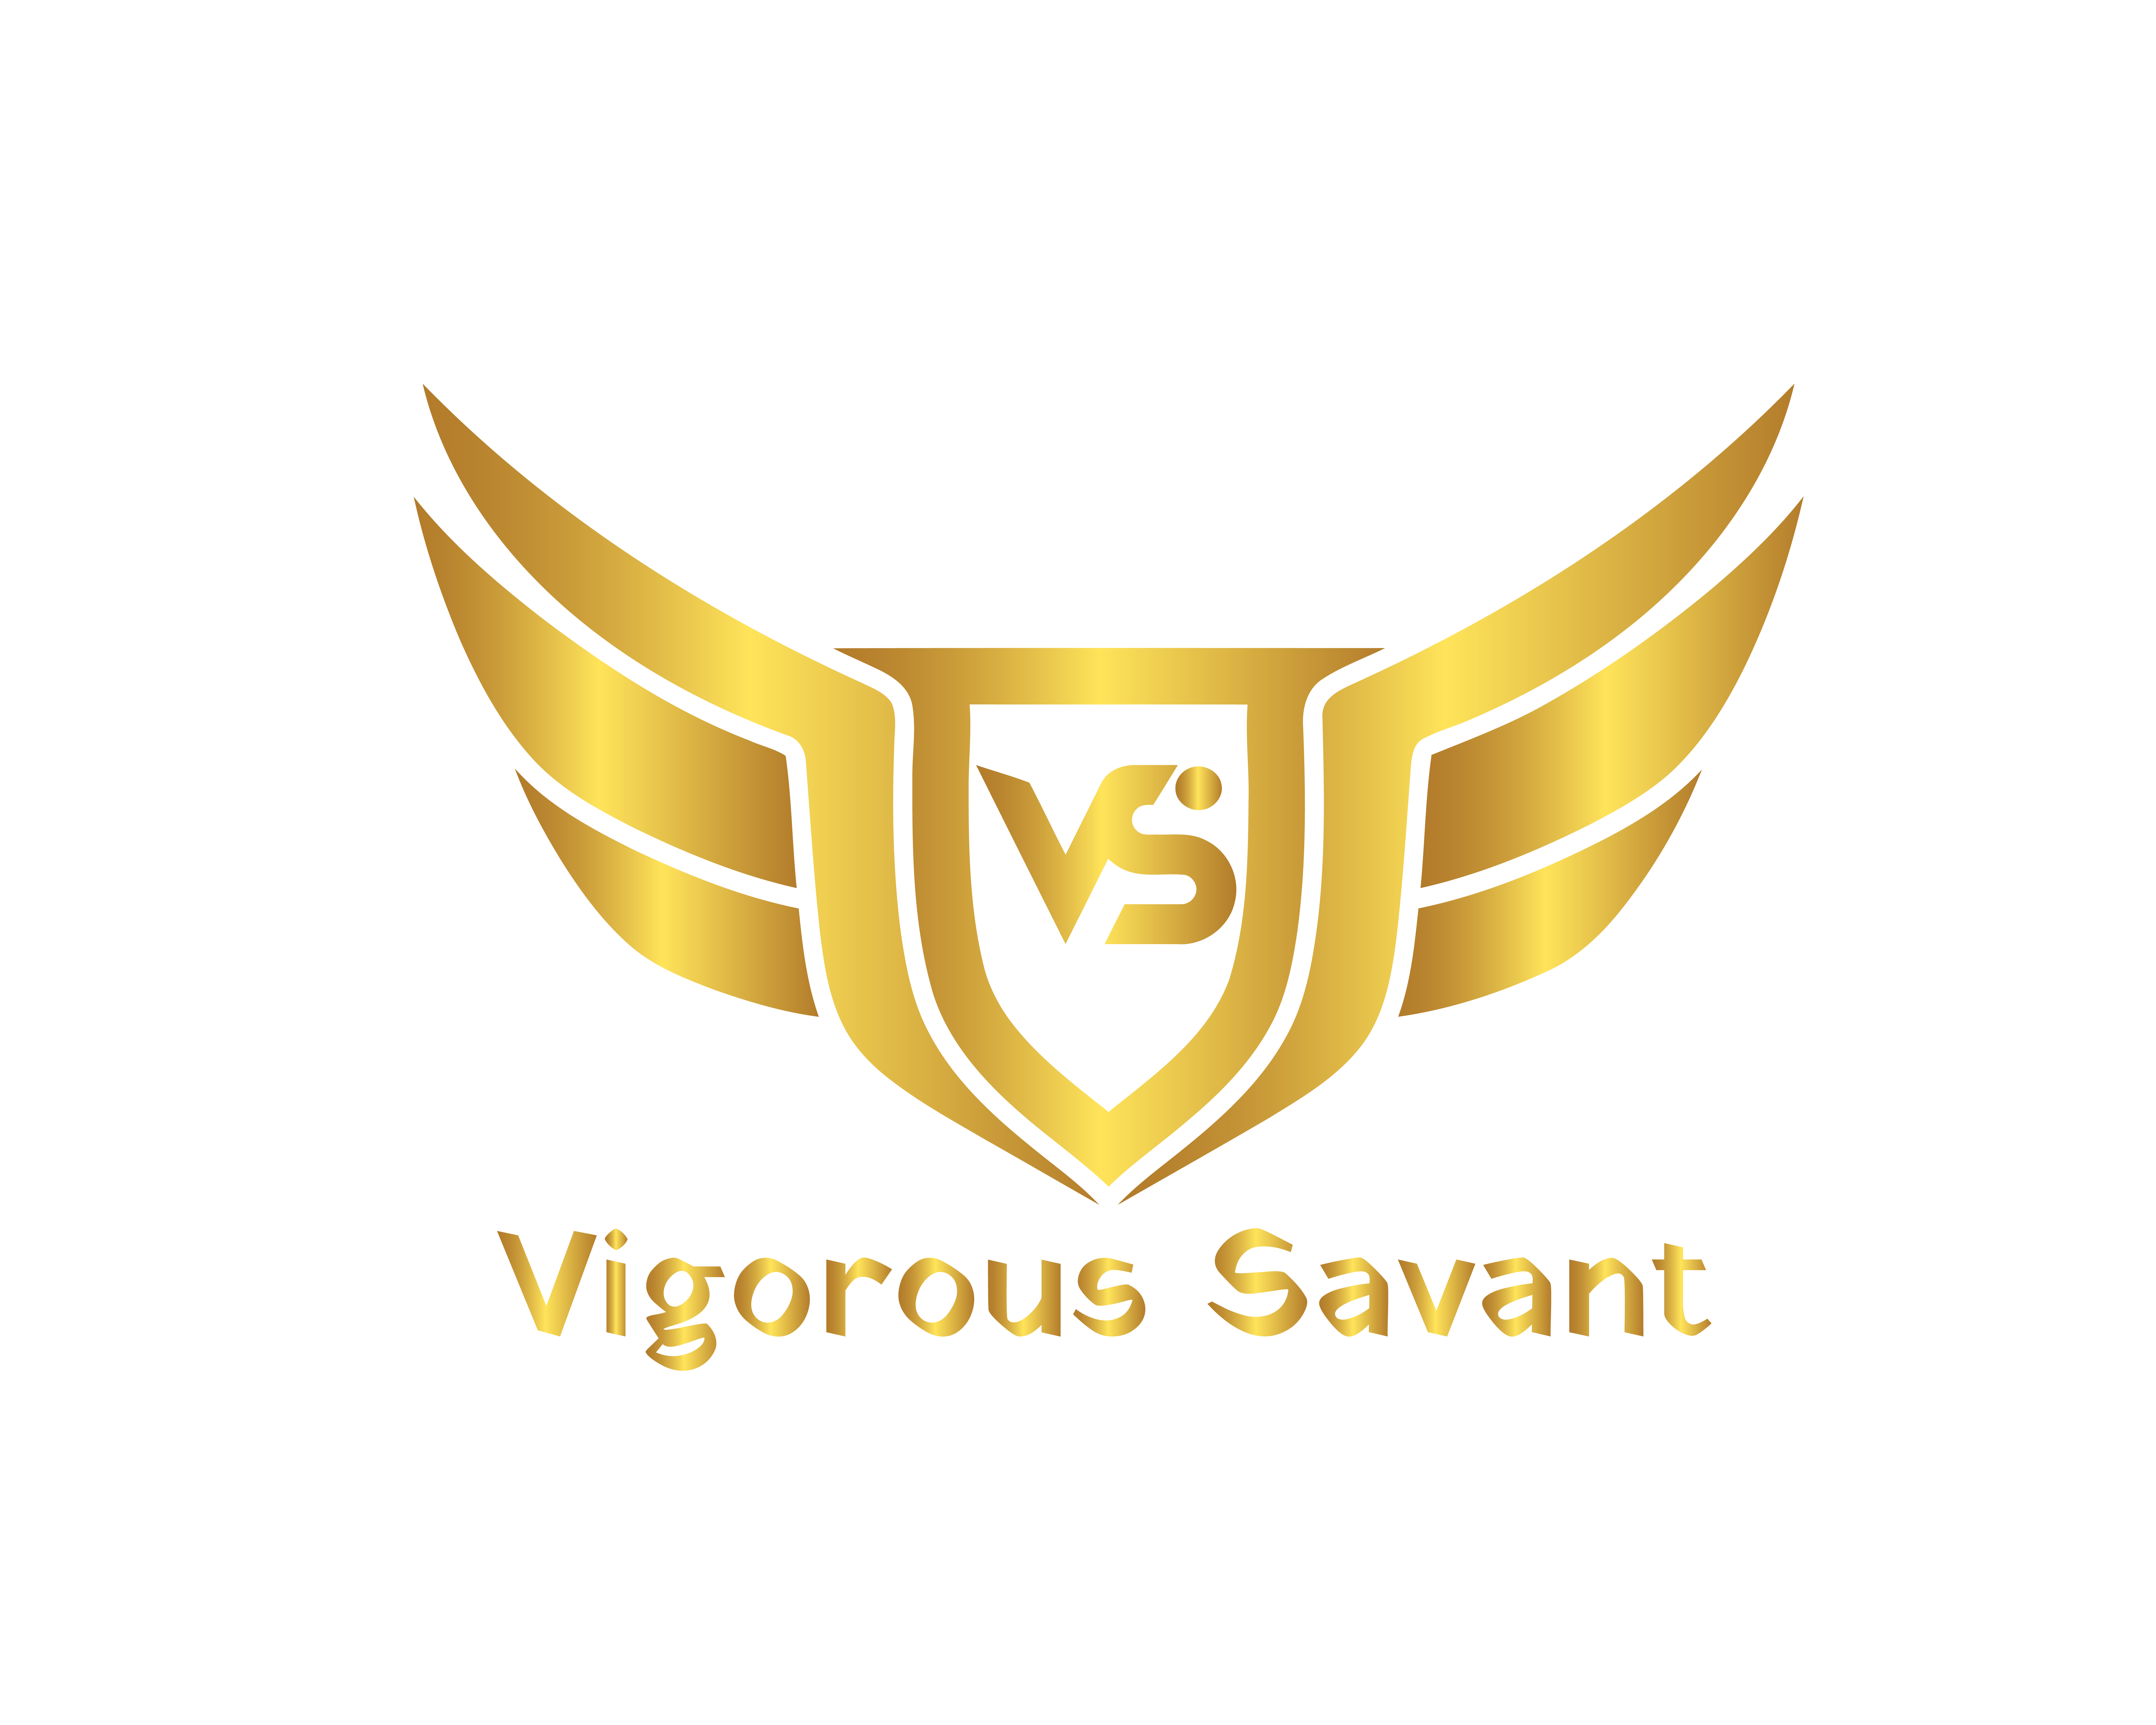 Vigorous Savant is an E-Learning Shop